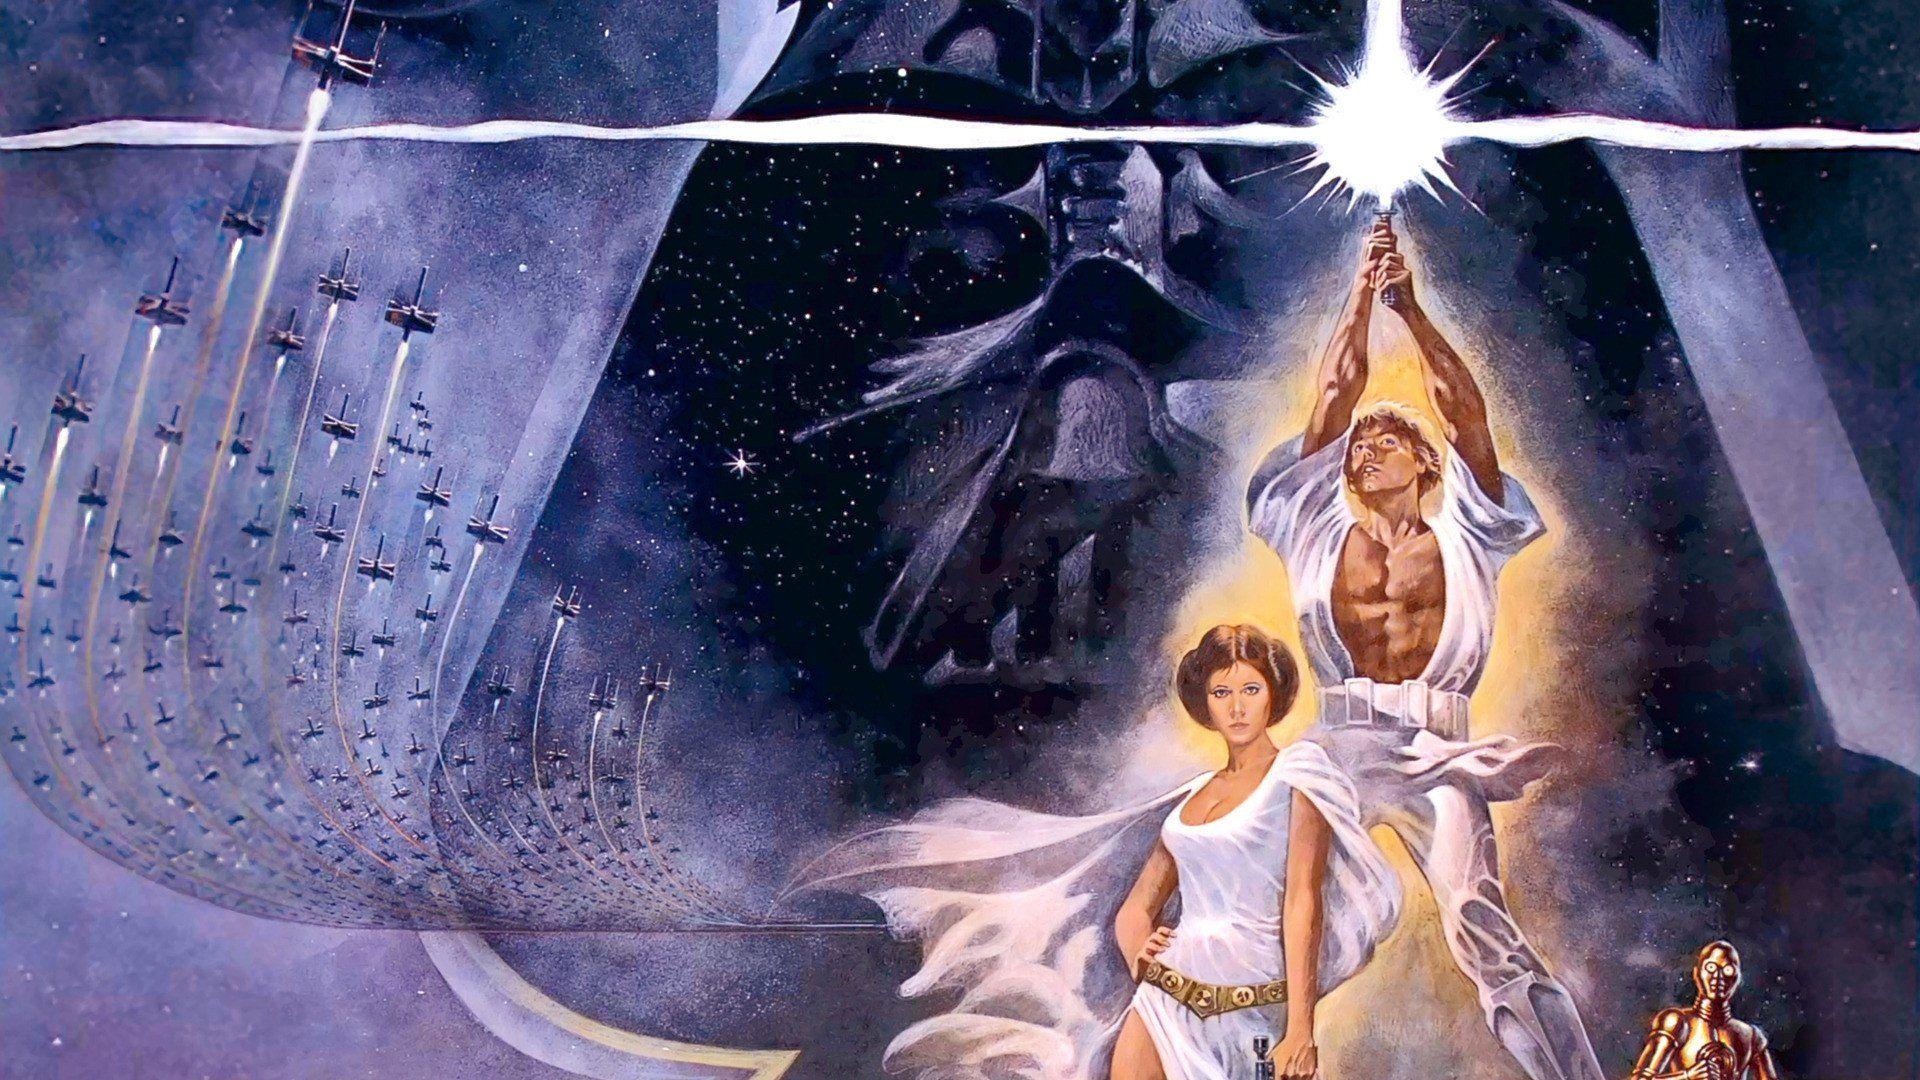 Star Wars Episode IV: A New Hope HD Wallpaper